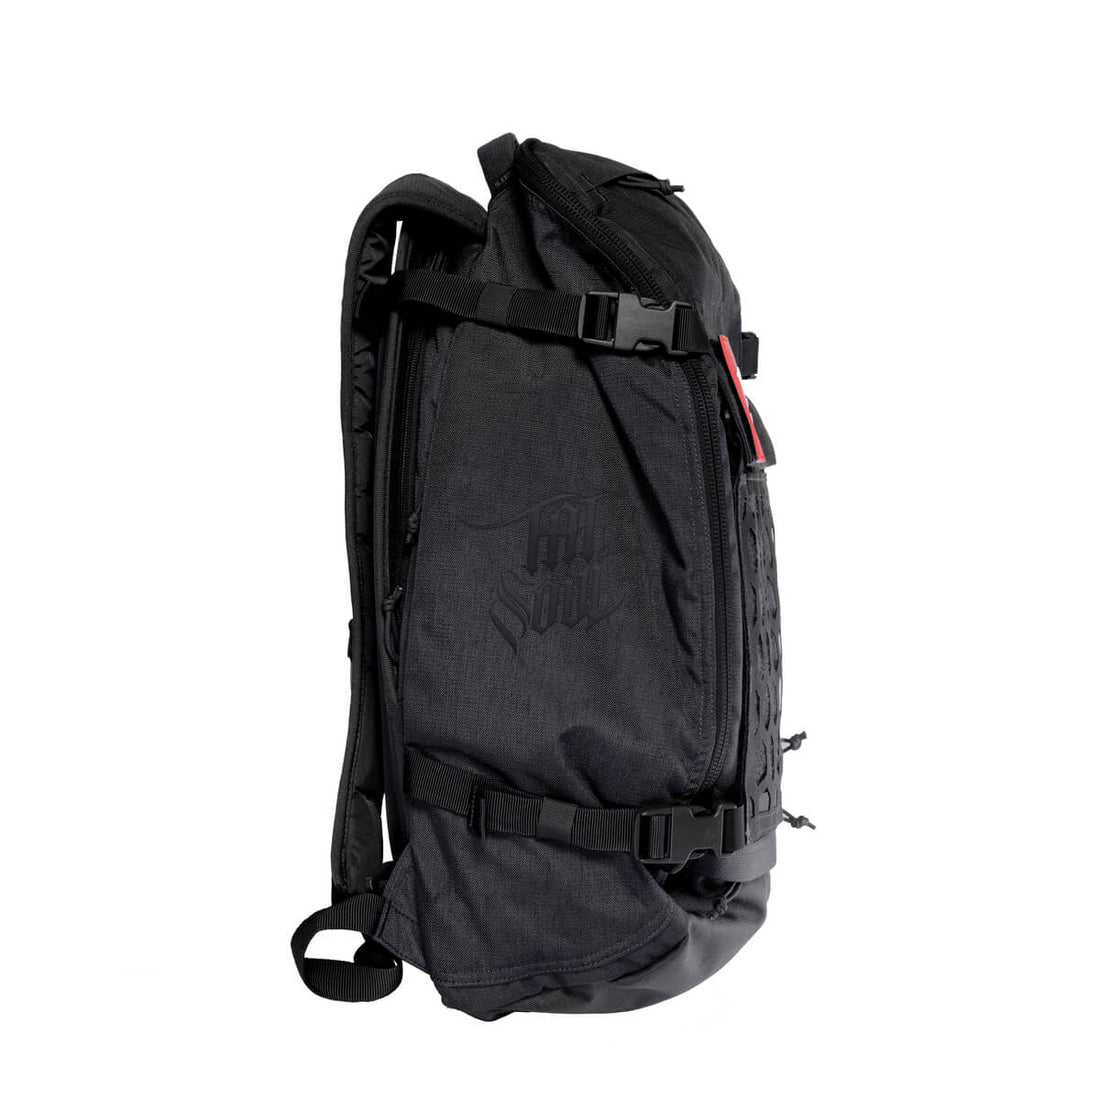 TATSoul x 5.11 Tactical Backpack (Black)